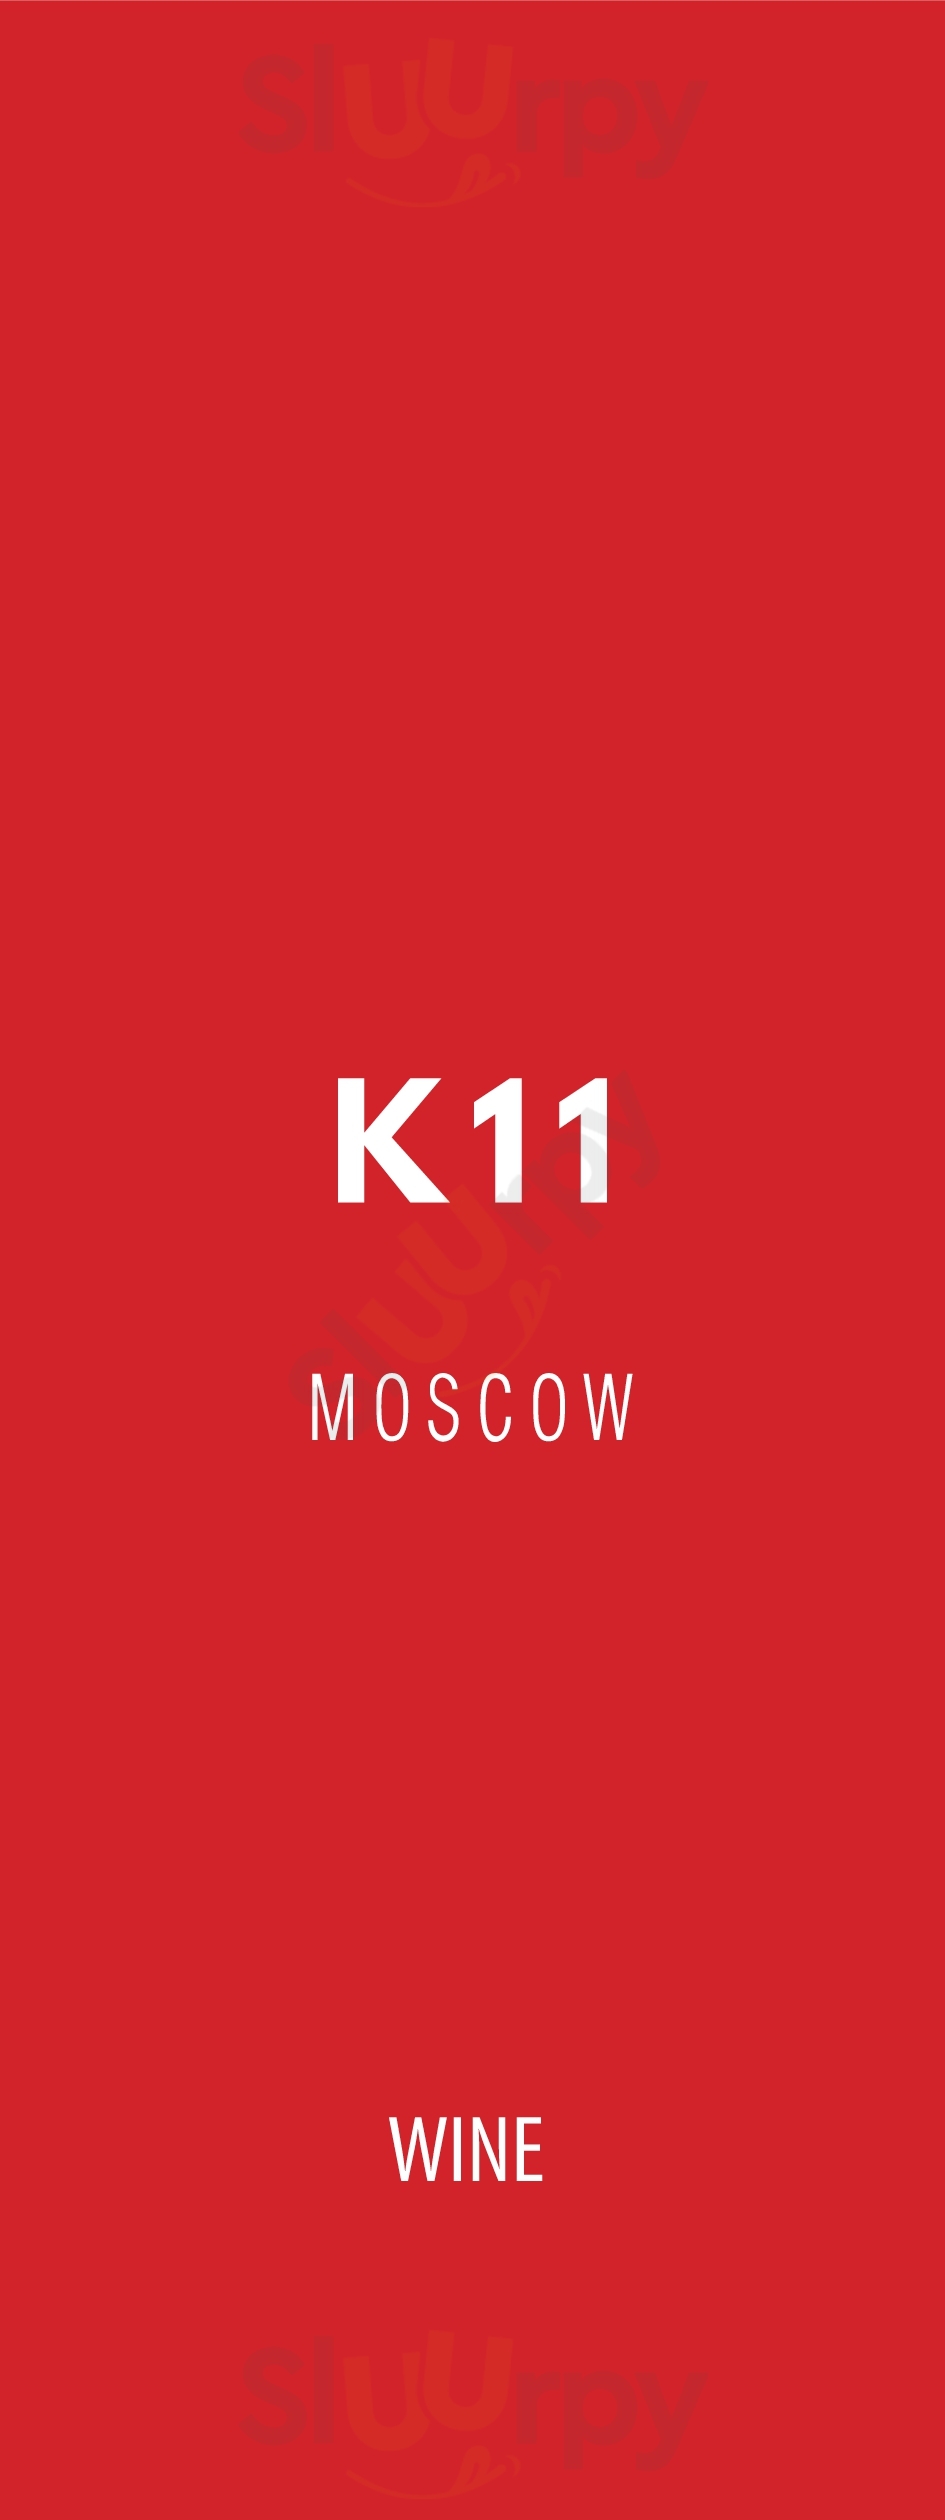 К11 Москва Menu - 1